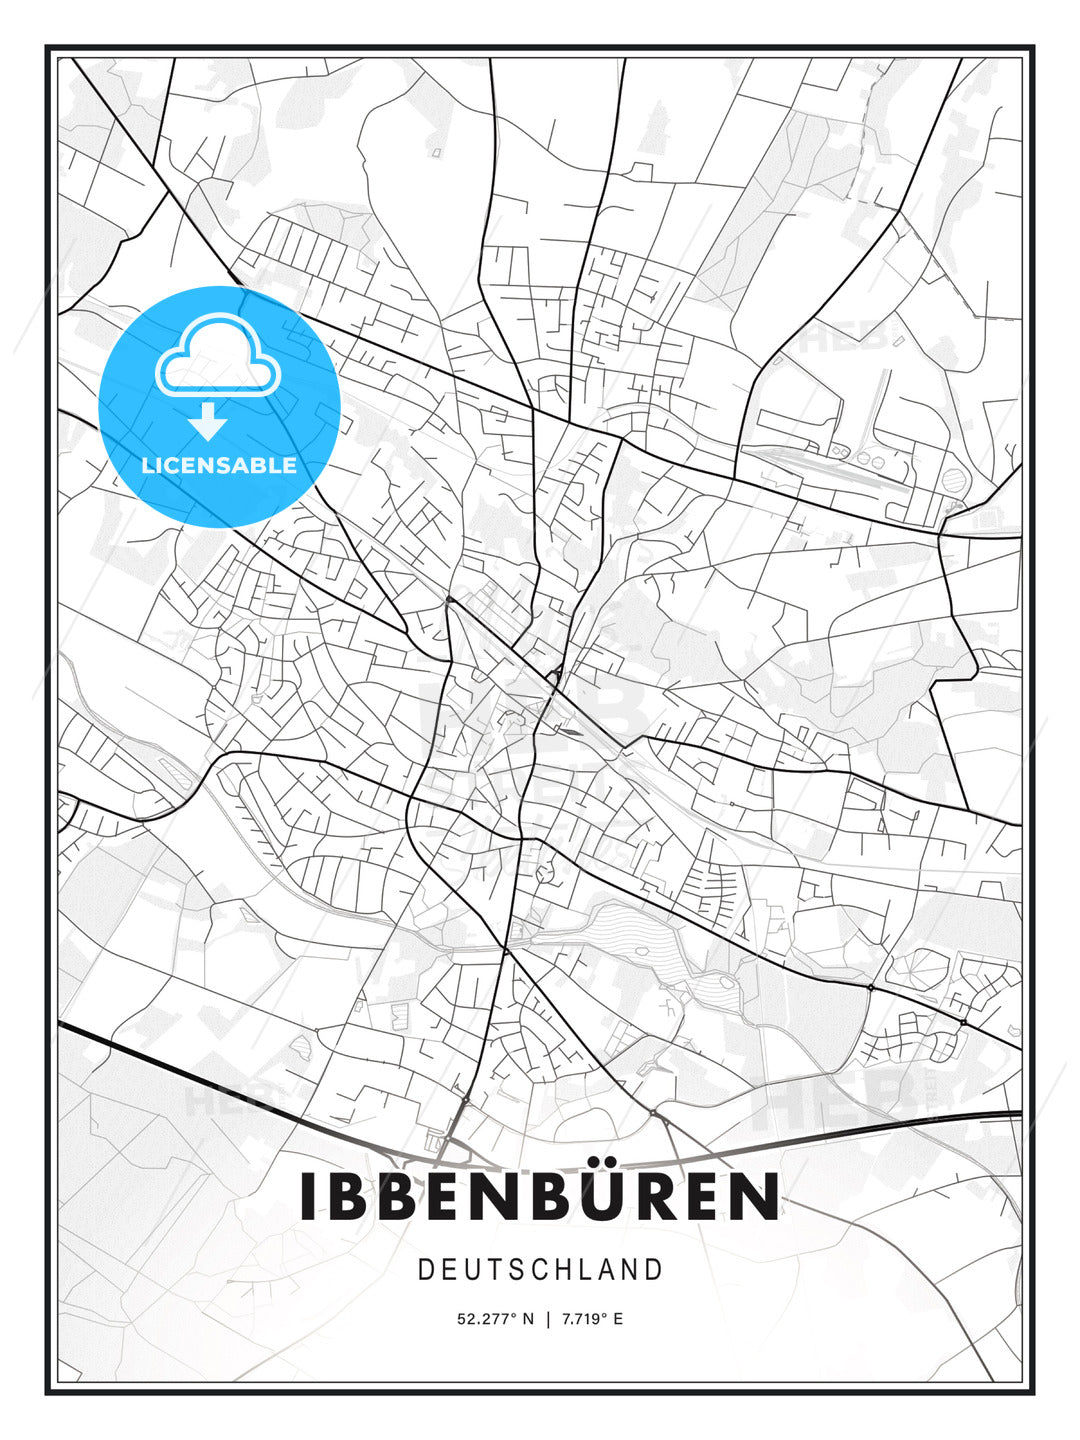 IBBENBÜREN / Ibbenburen, Germany, Modern Print Template in Various Formats - HEBSTREITS Sketches